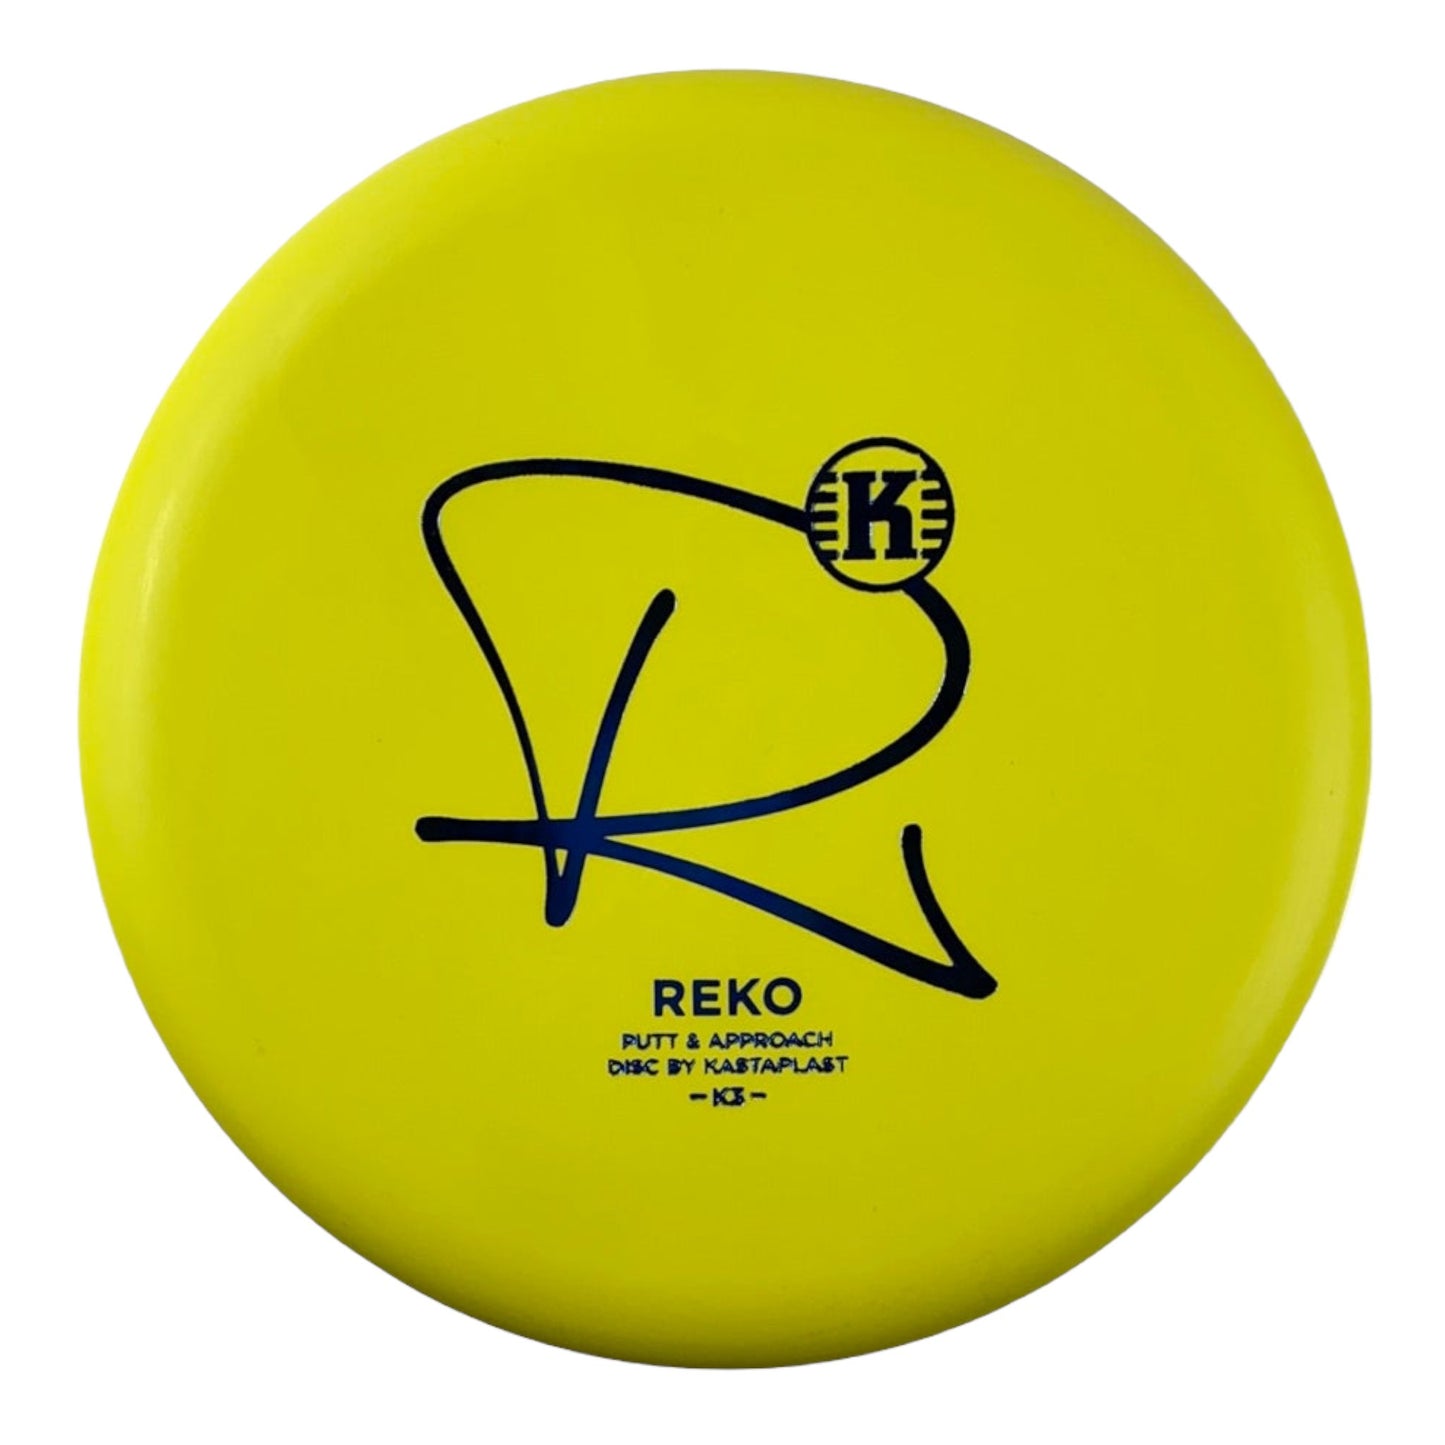 Kastaplast Reko | K3 | Yellow/Blue 160g Disc Golf